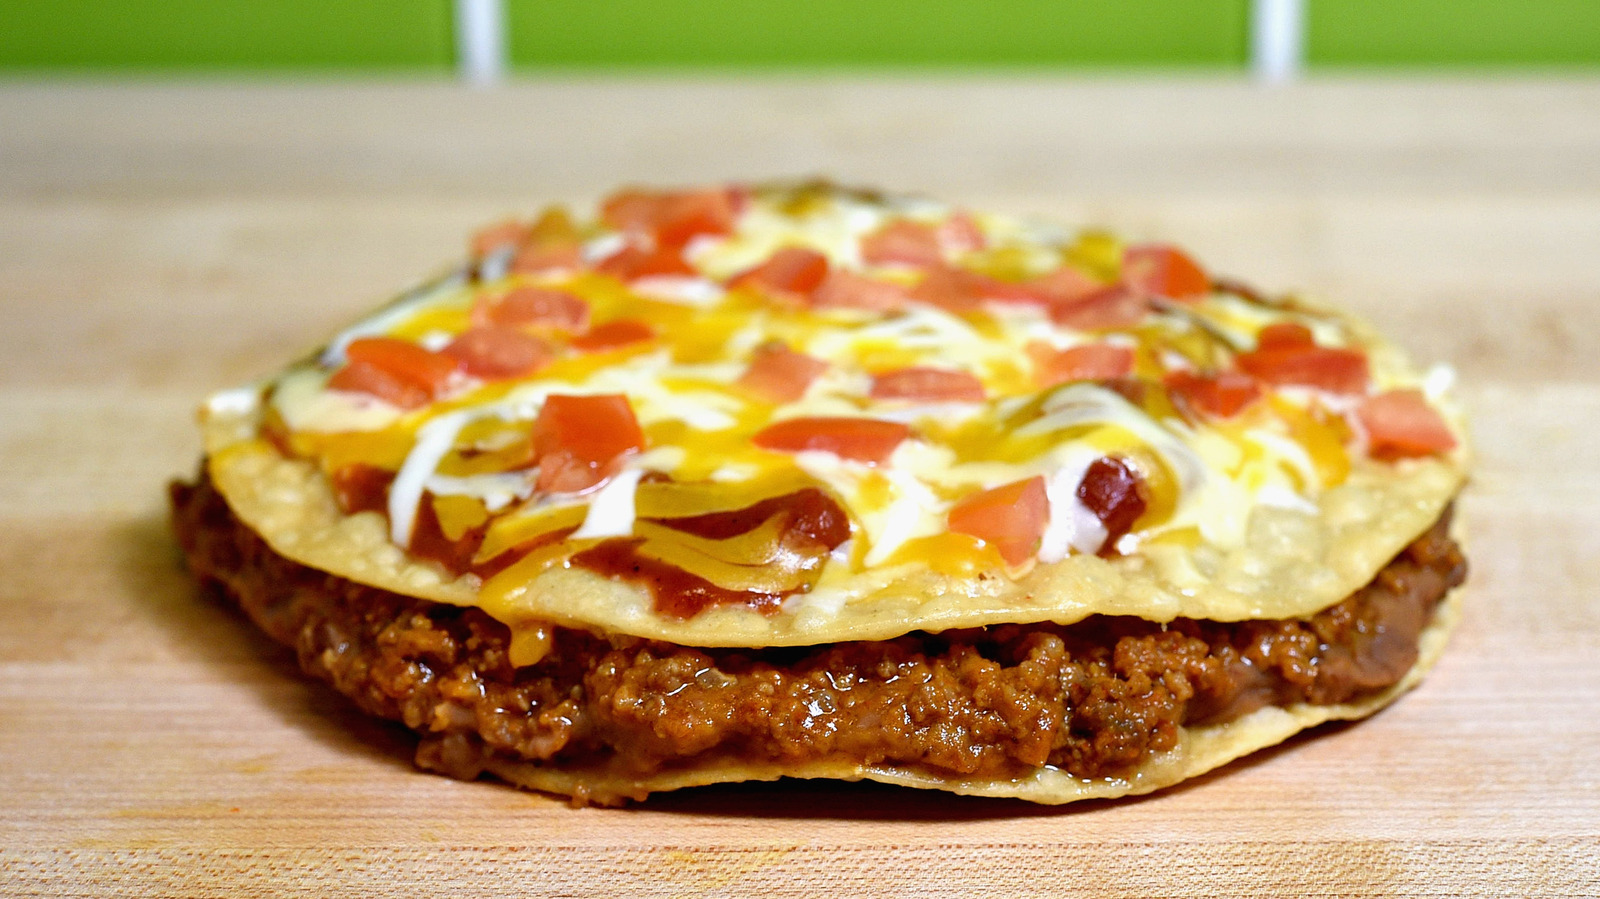 Taco Bell Mexican Pizza Lawsuit: A Legal Battle Over a Fan-Favorite Menu Item